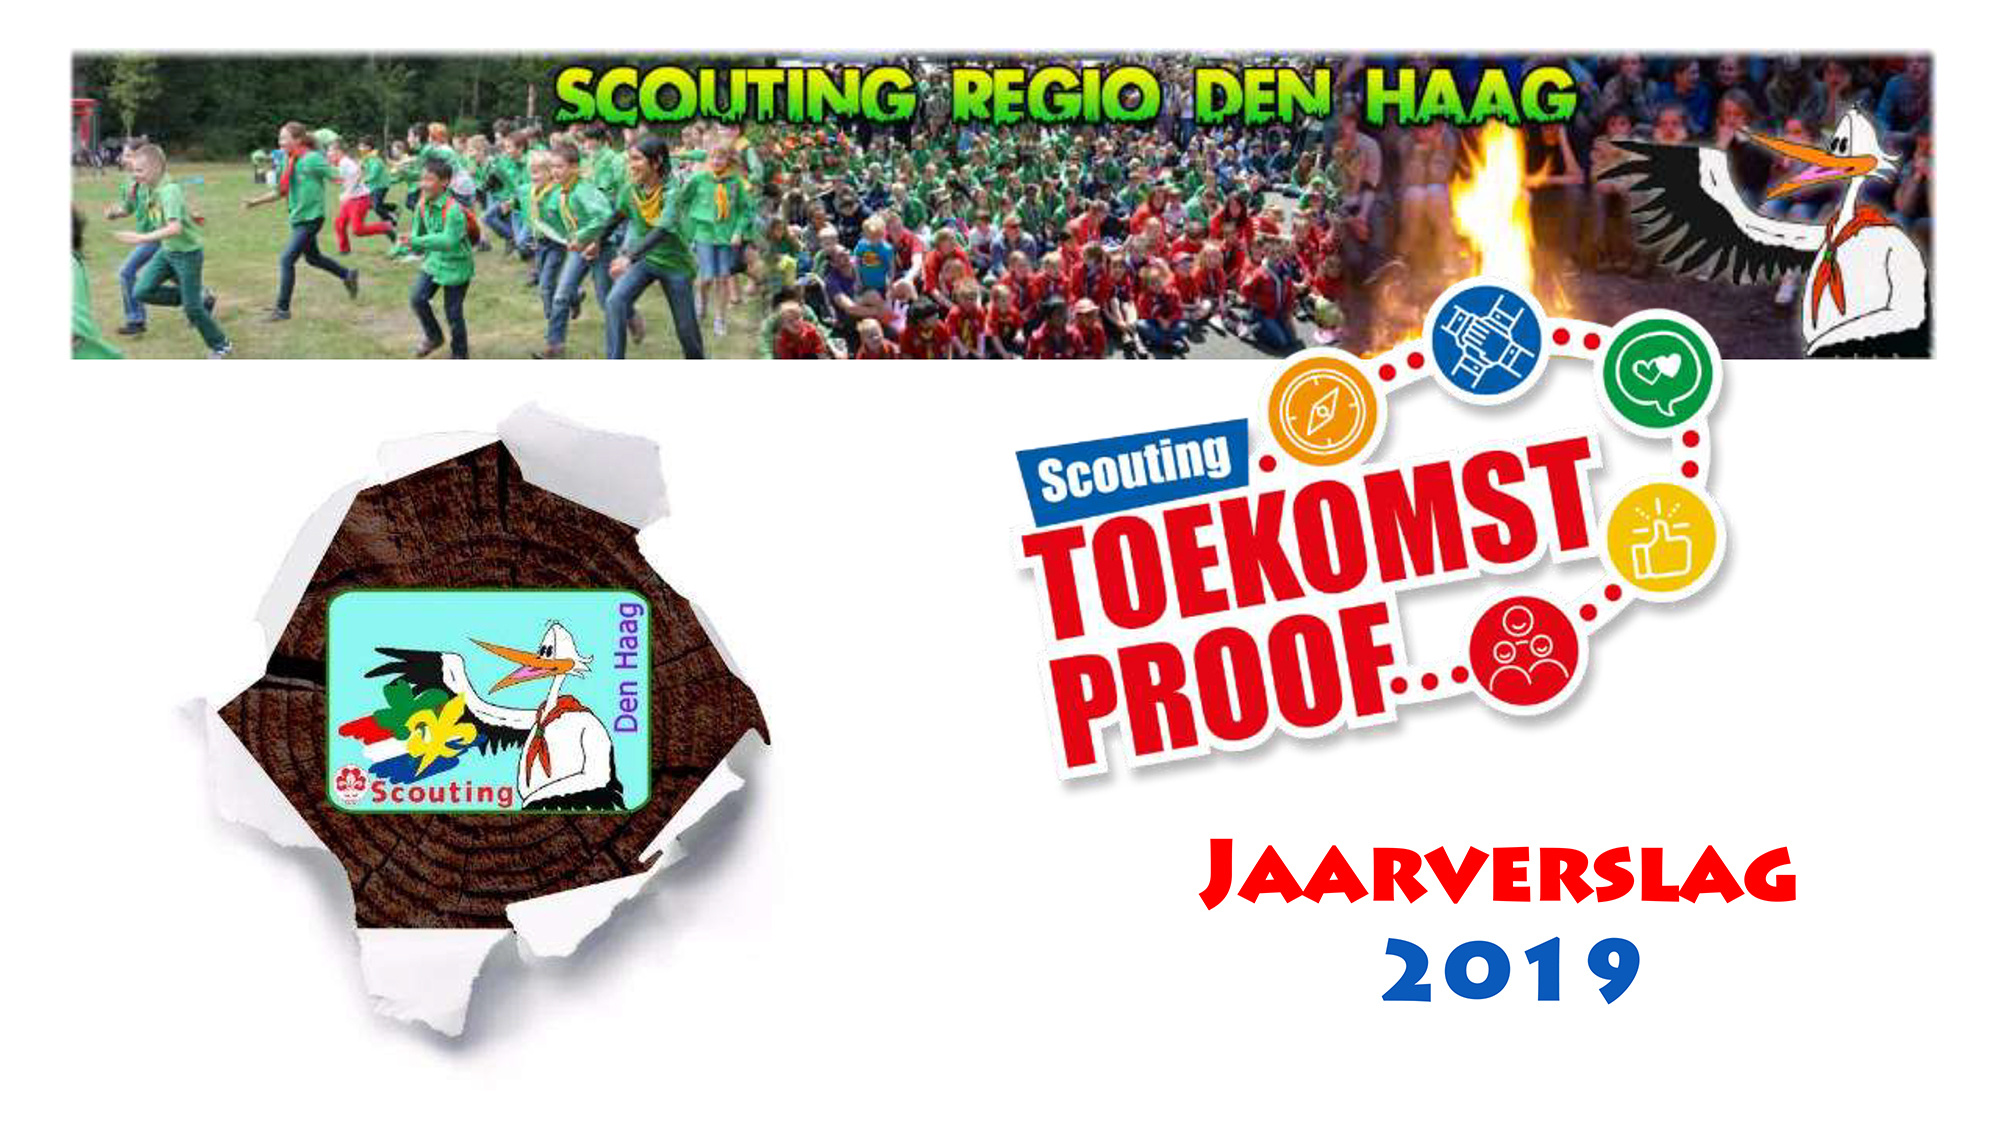 Jaarverslag 2019 Scouting Den Haag